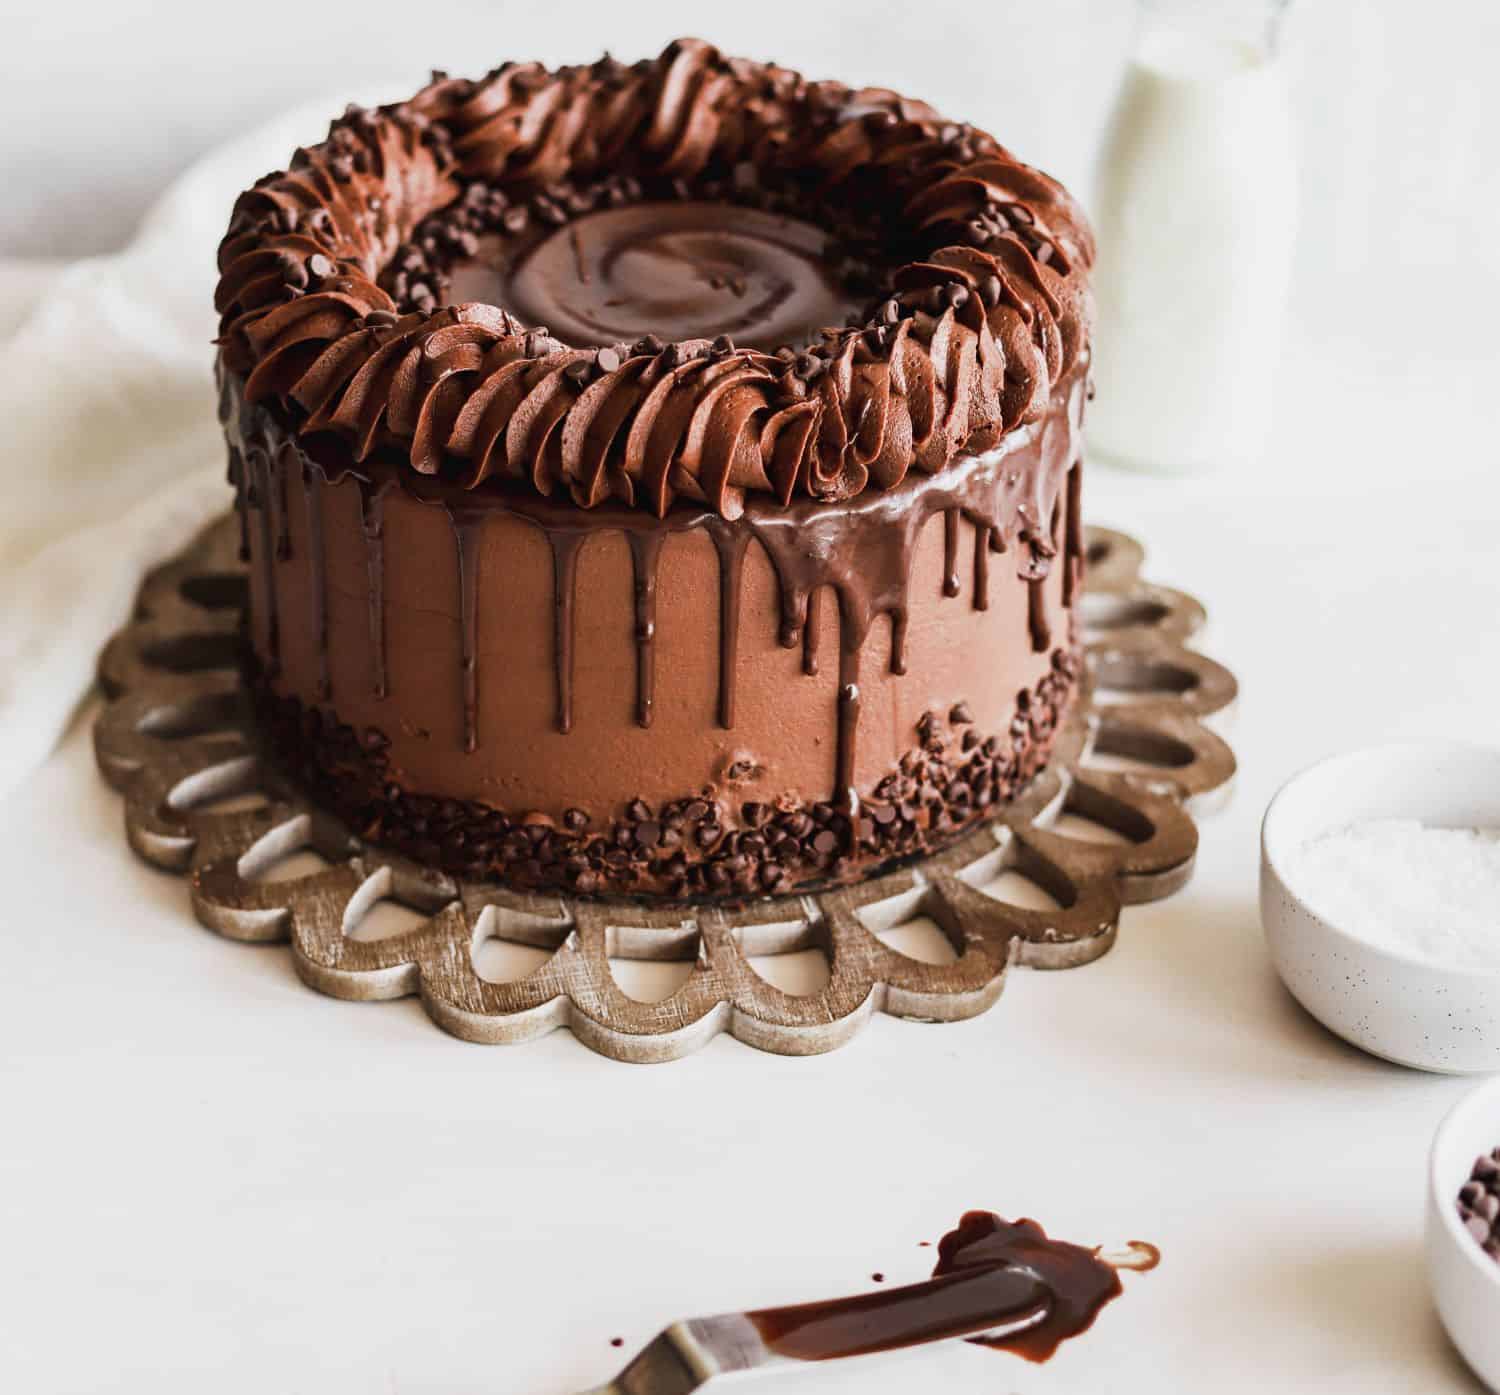 Decorated Chocolate Cake